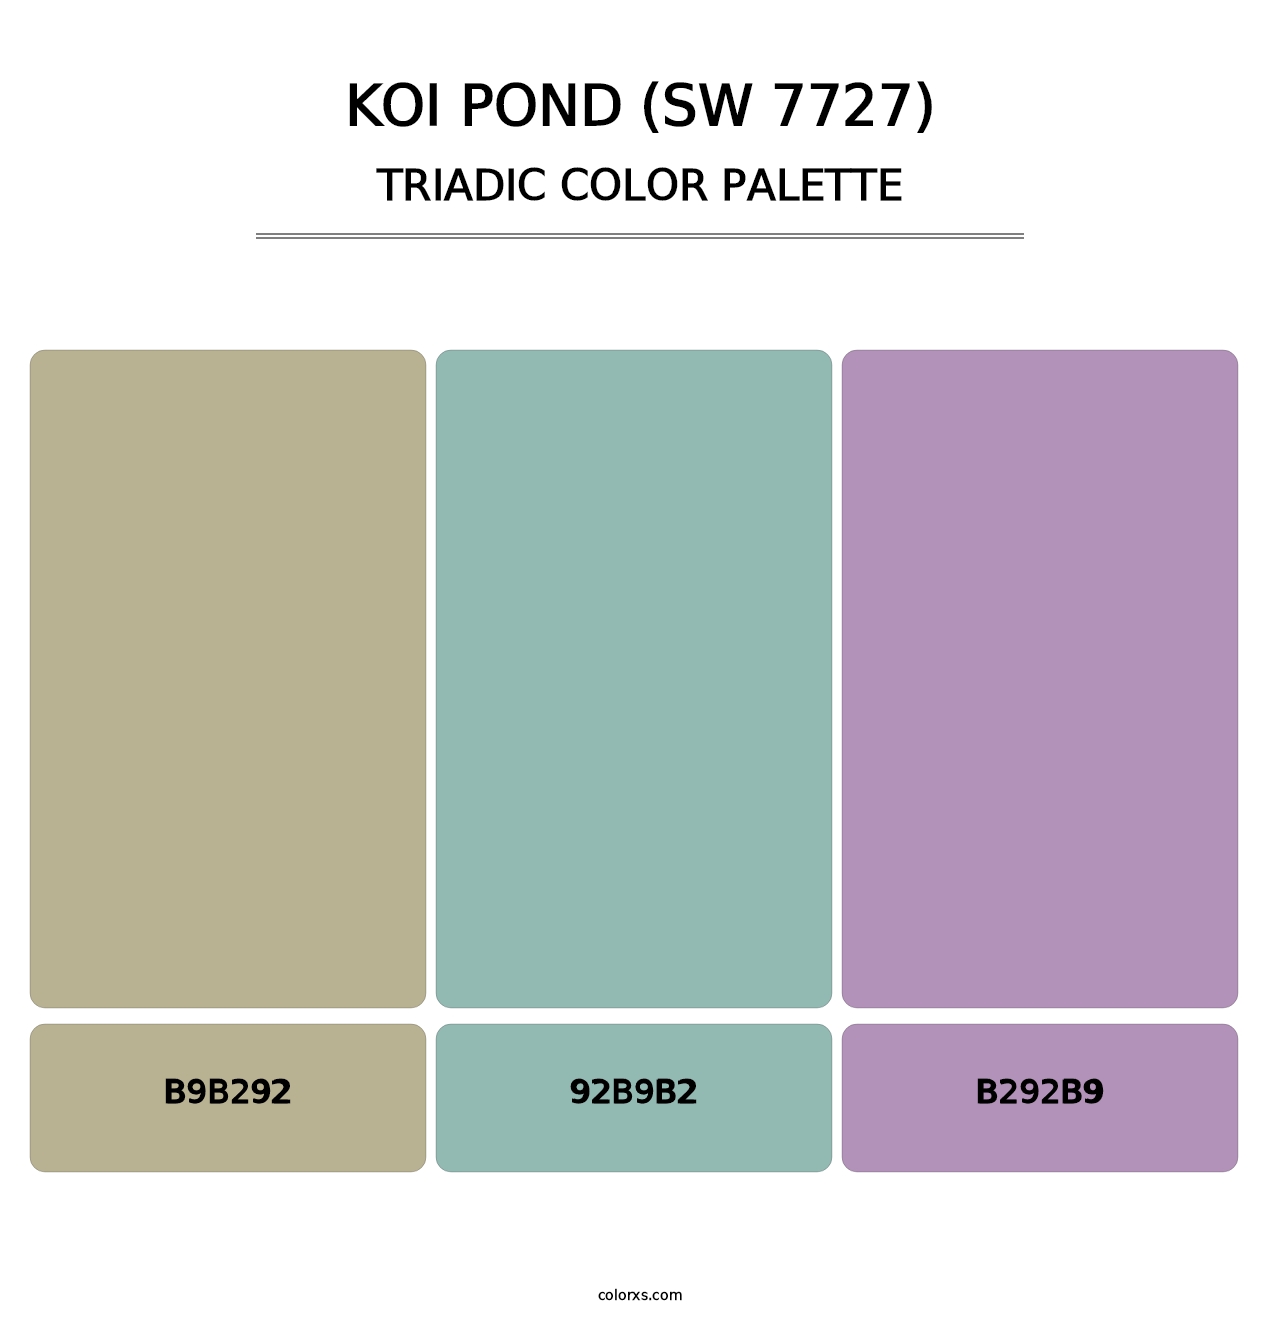 Koi Pond (SW 7727) - Triadic Color Palette